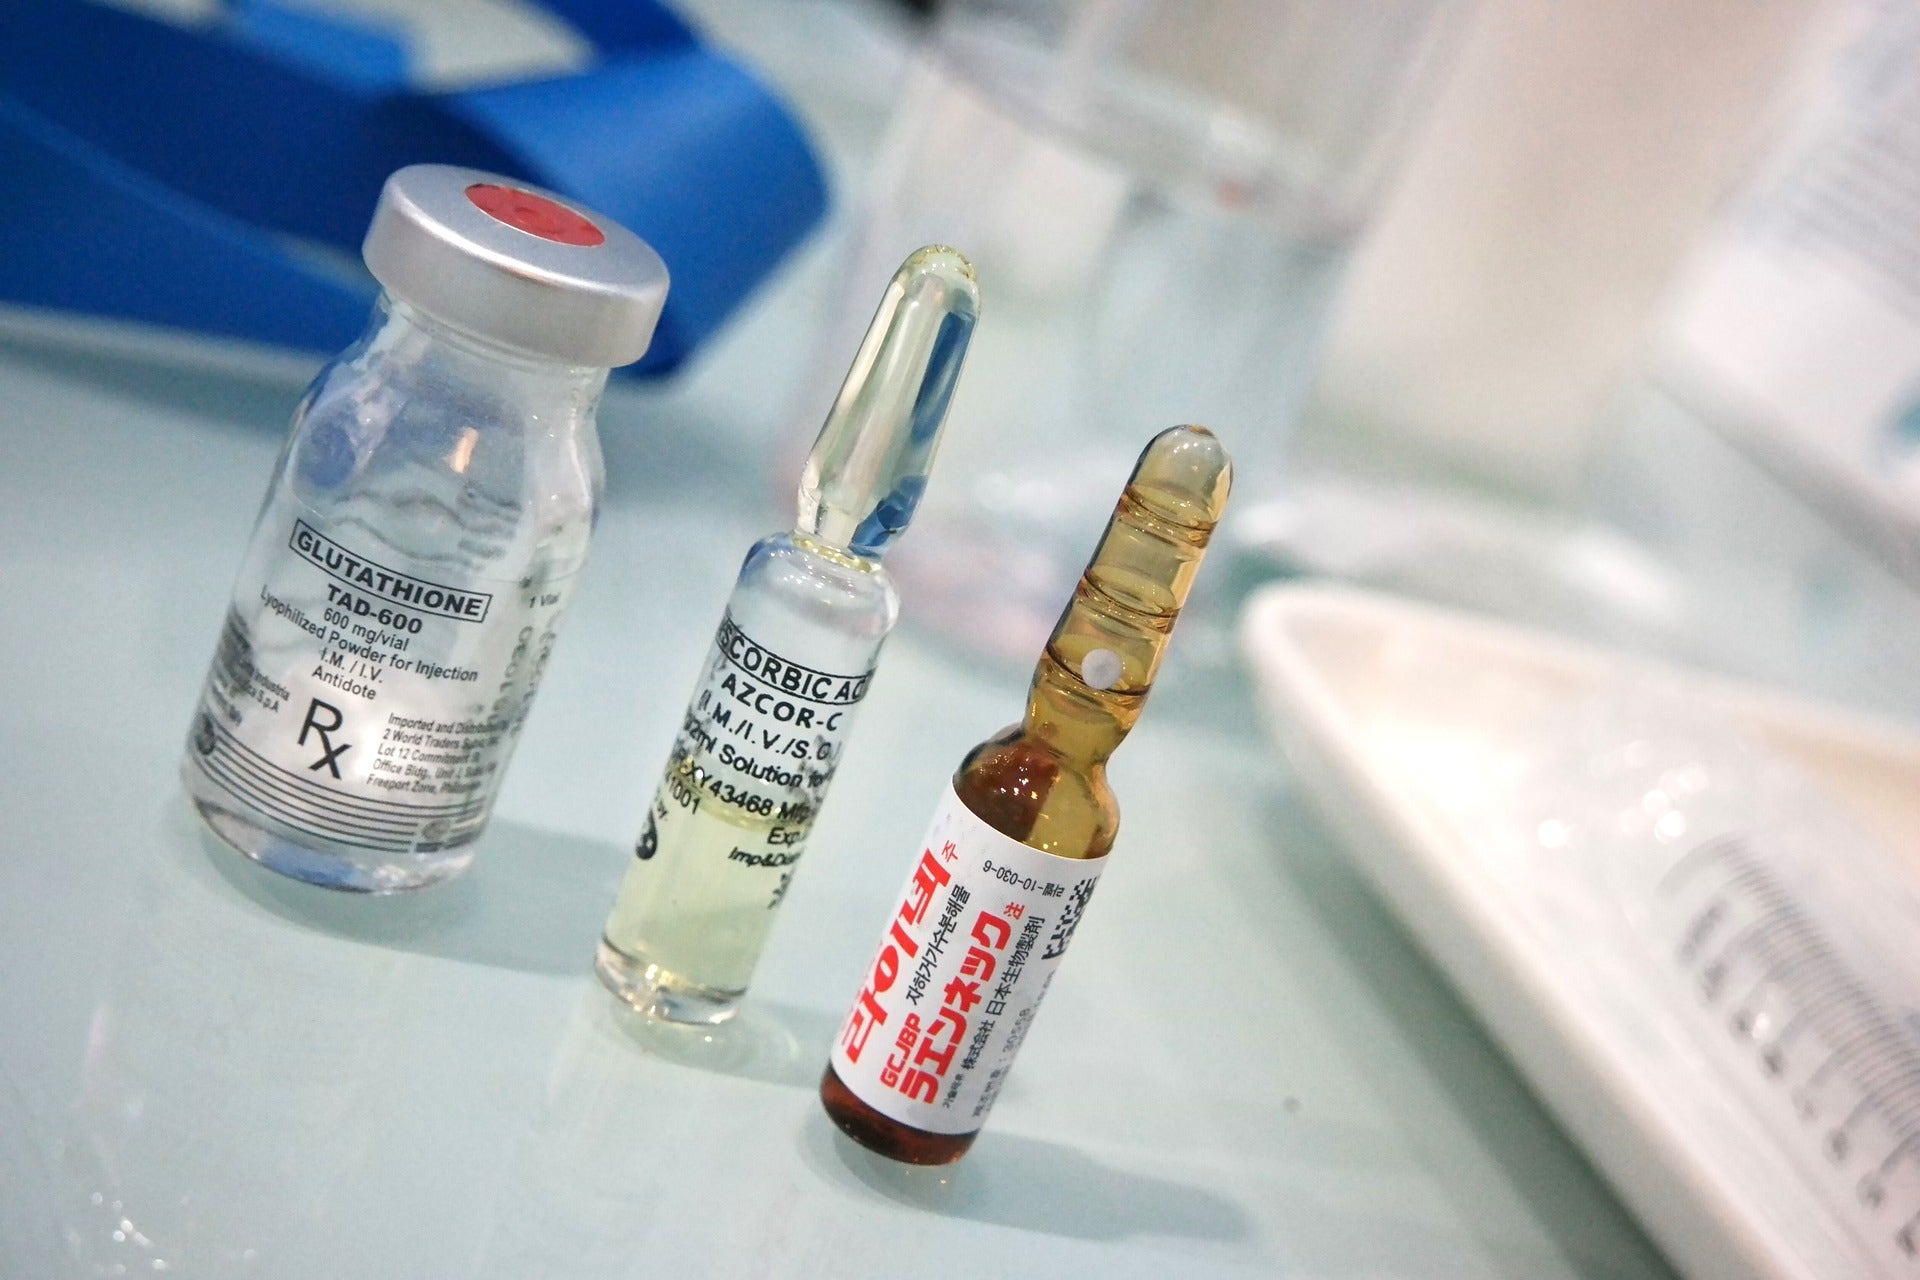 Vir Biotech 'Aggressively Working' On Potential Wuhan Coronavirus Treatment